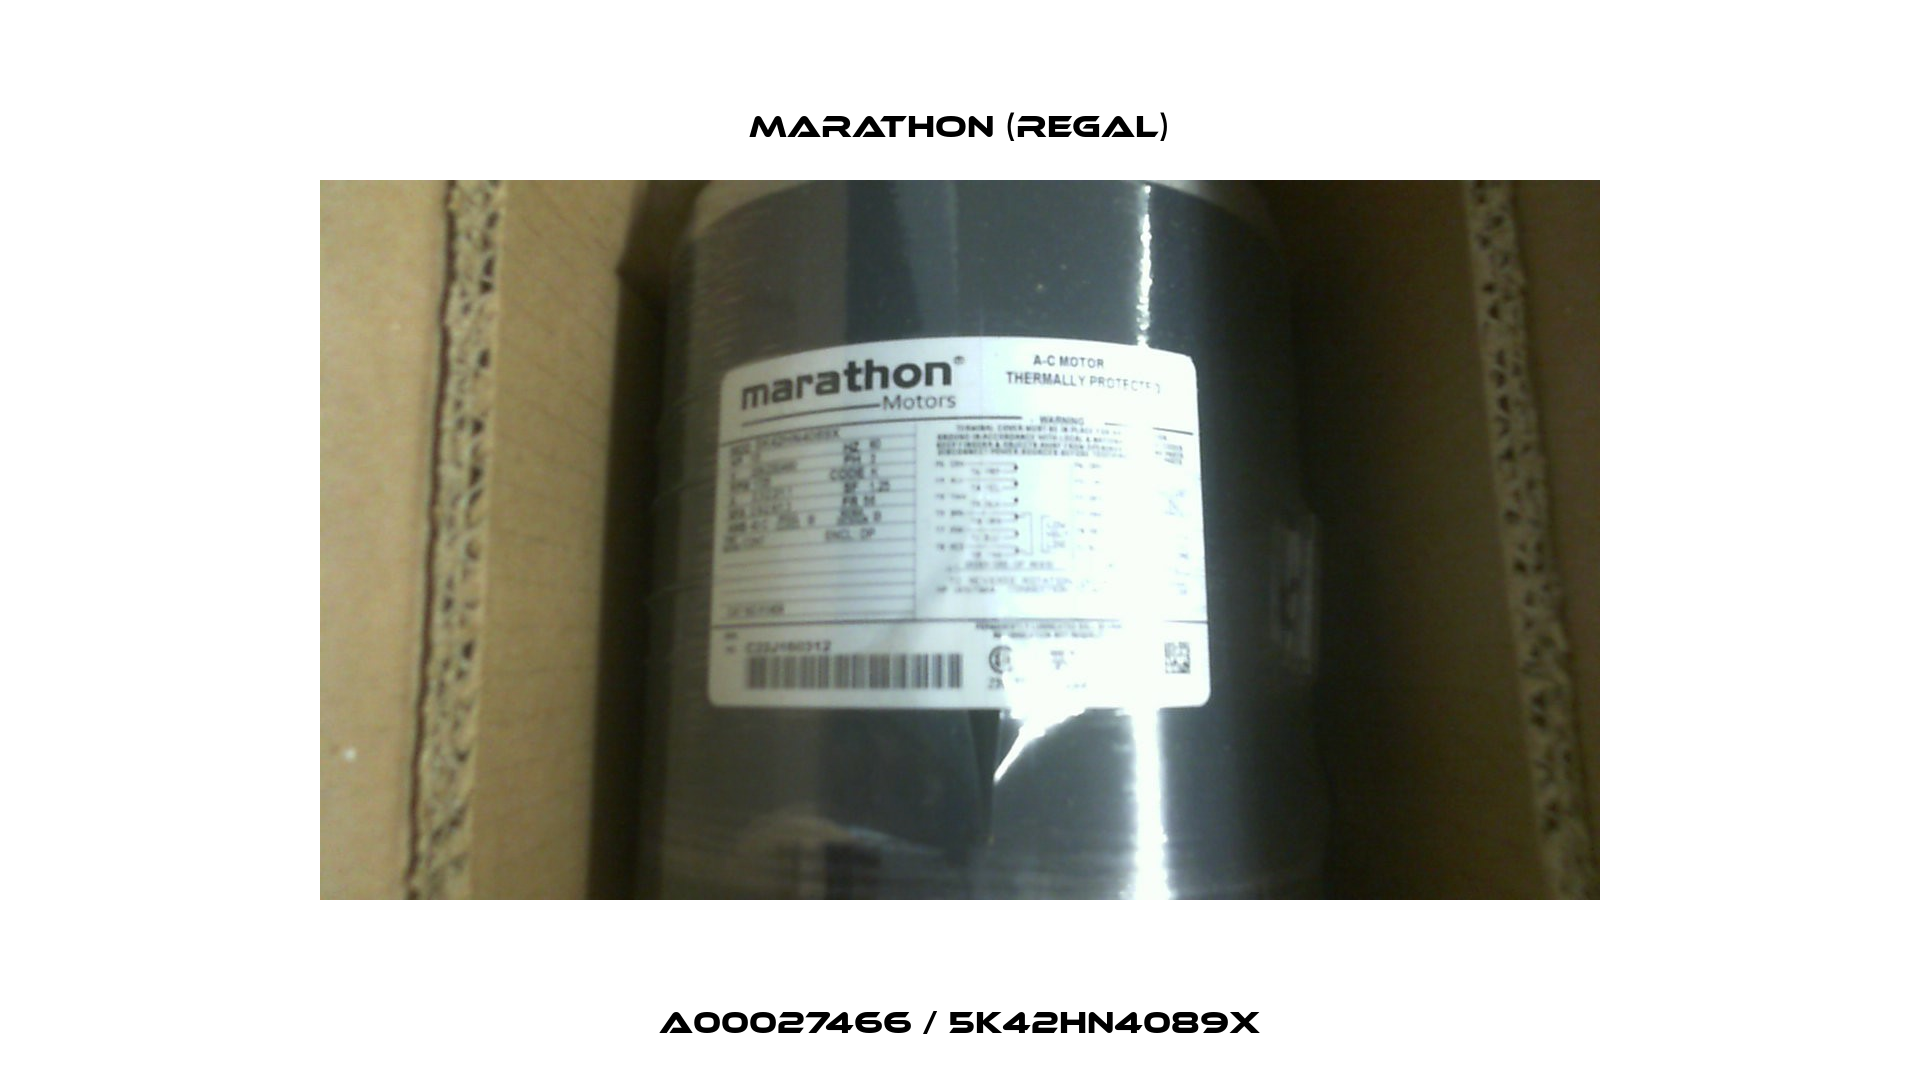 A00027466 / 5K42HN4089X Marathon (Regal)